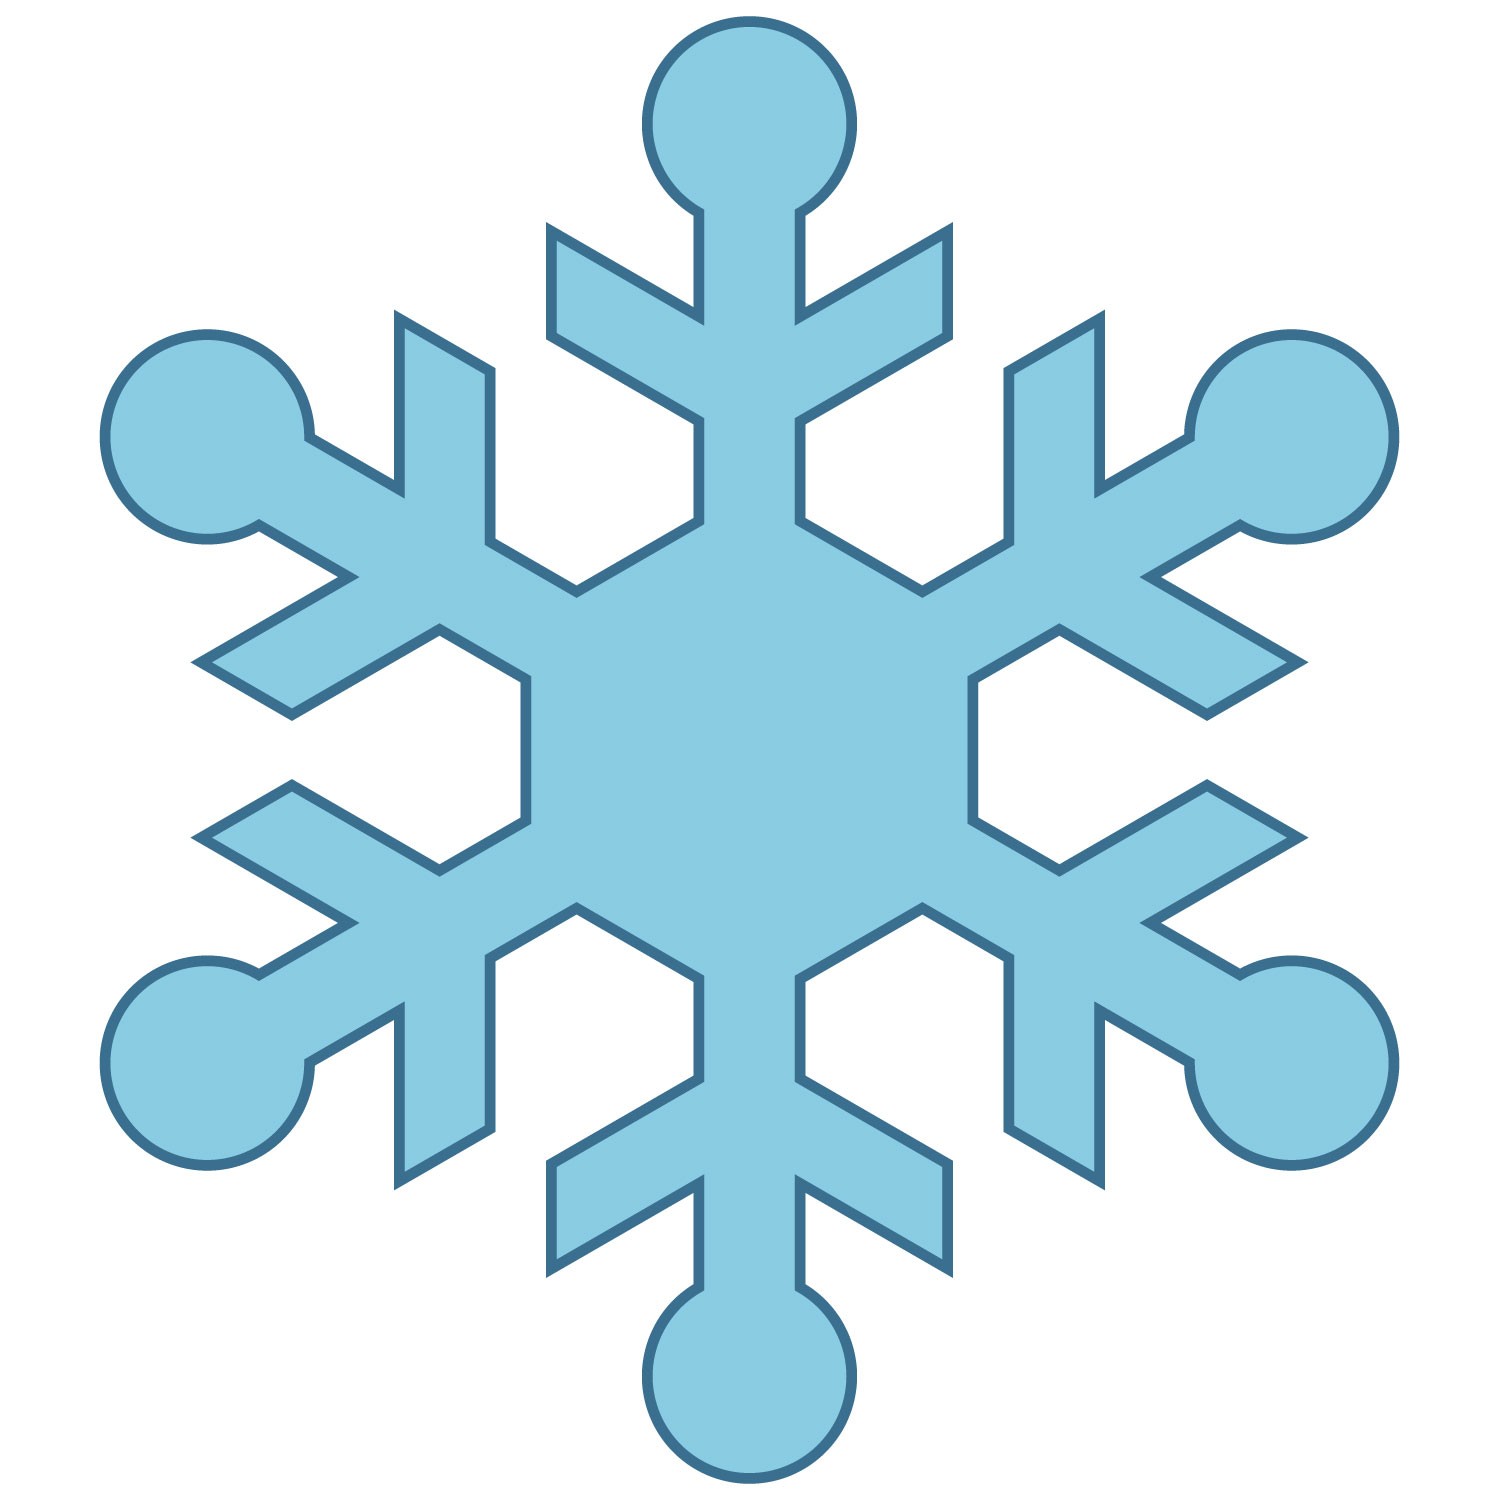 Free Snowflake Clipart - clip